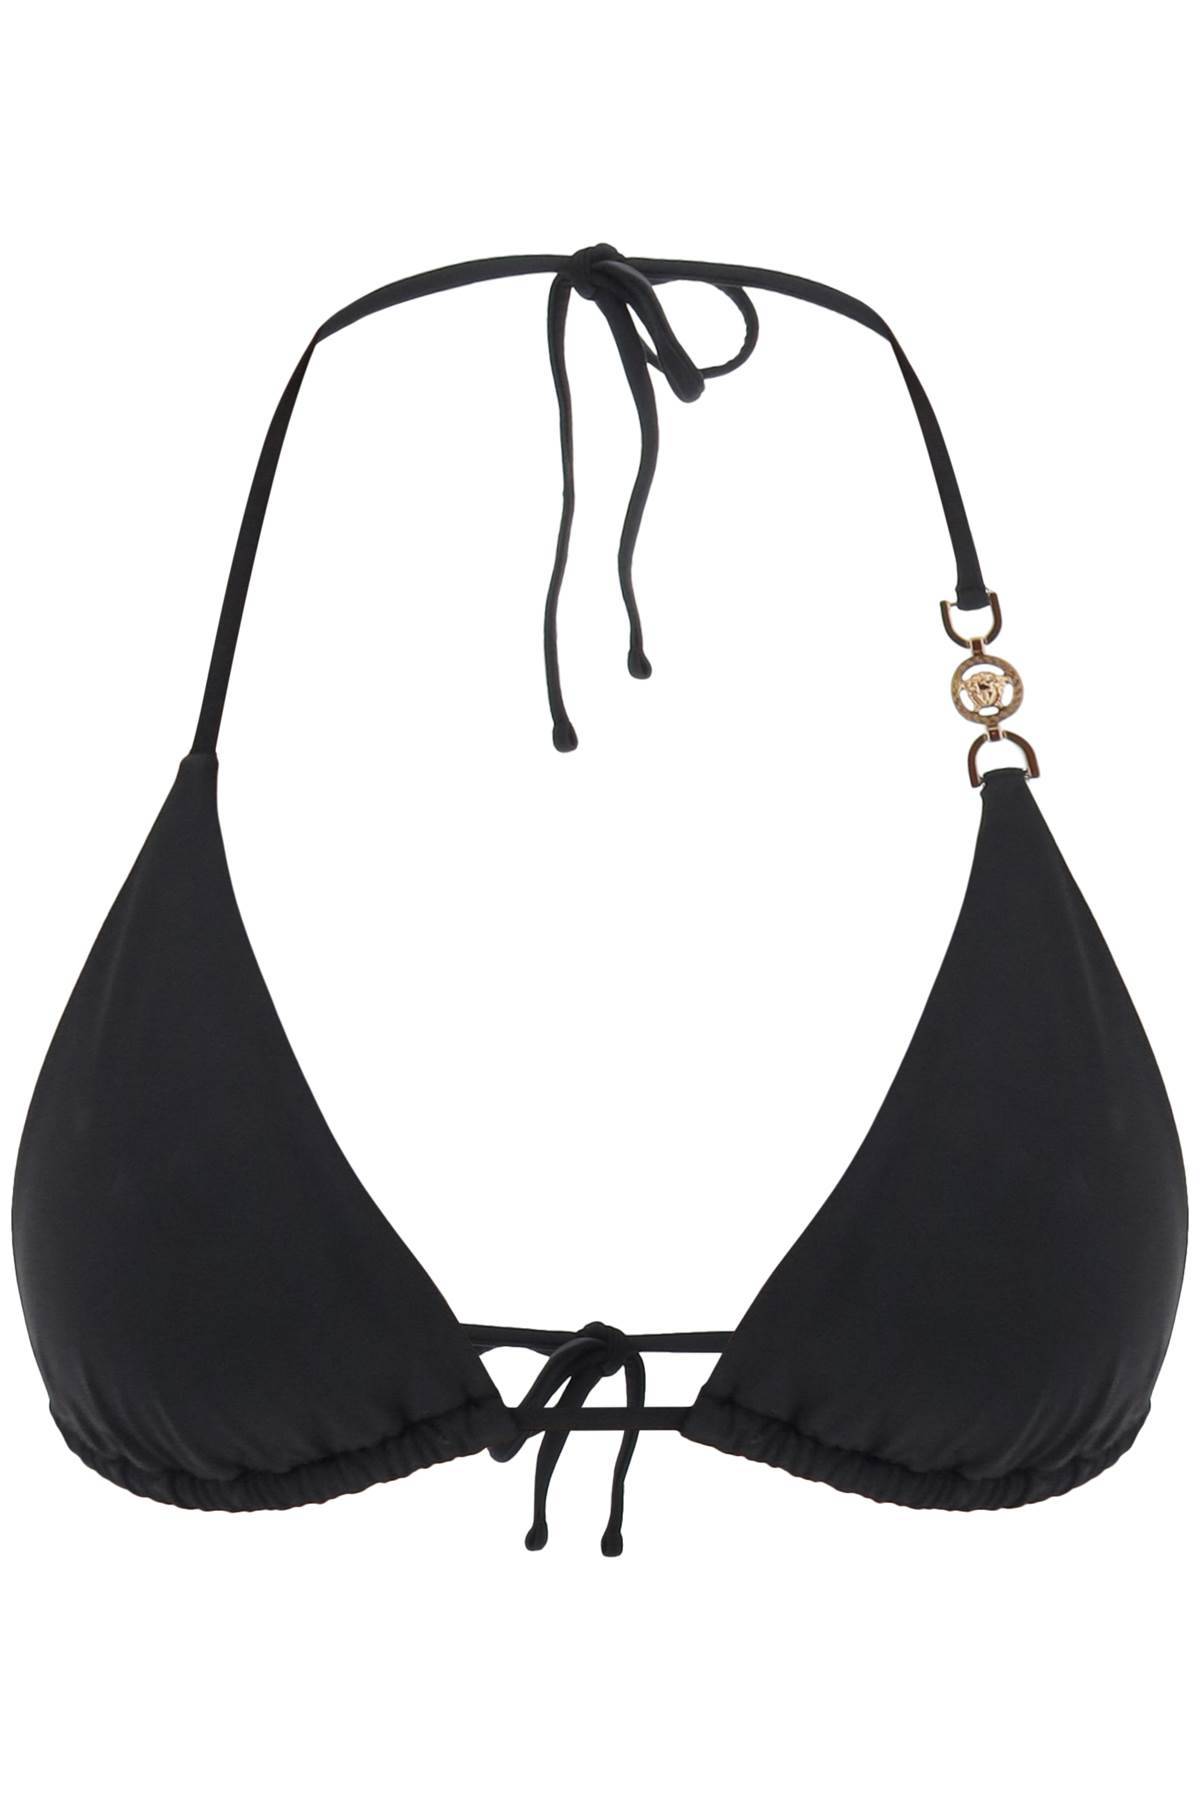 Versace VERSACE medusa triangle bikini top